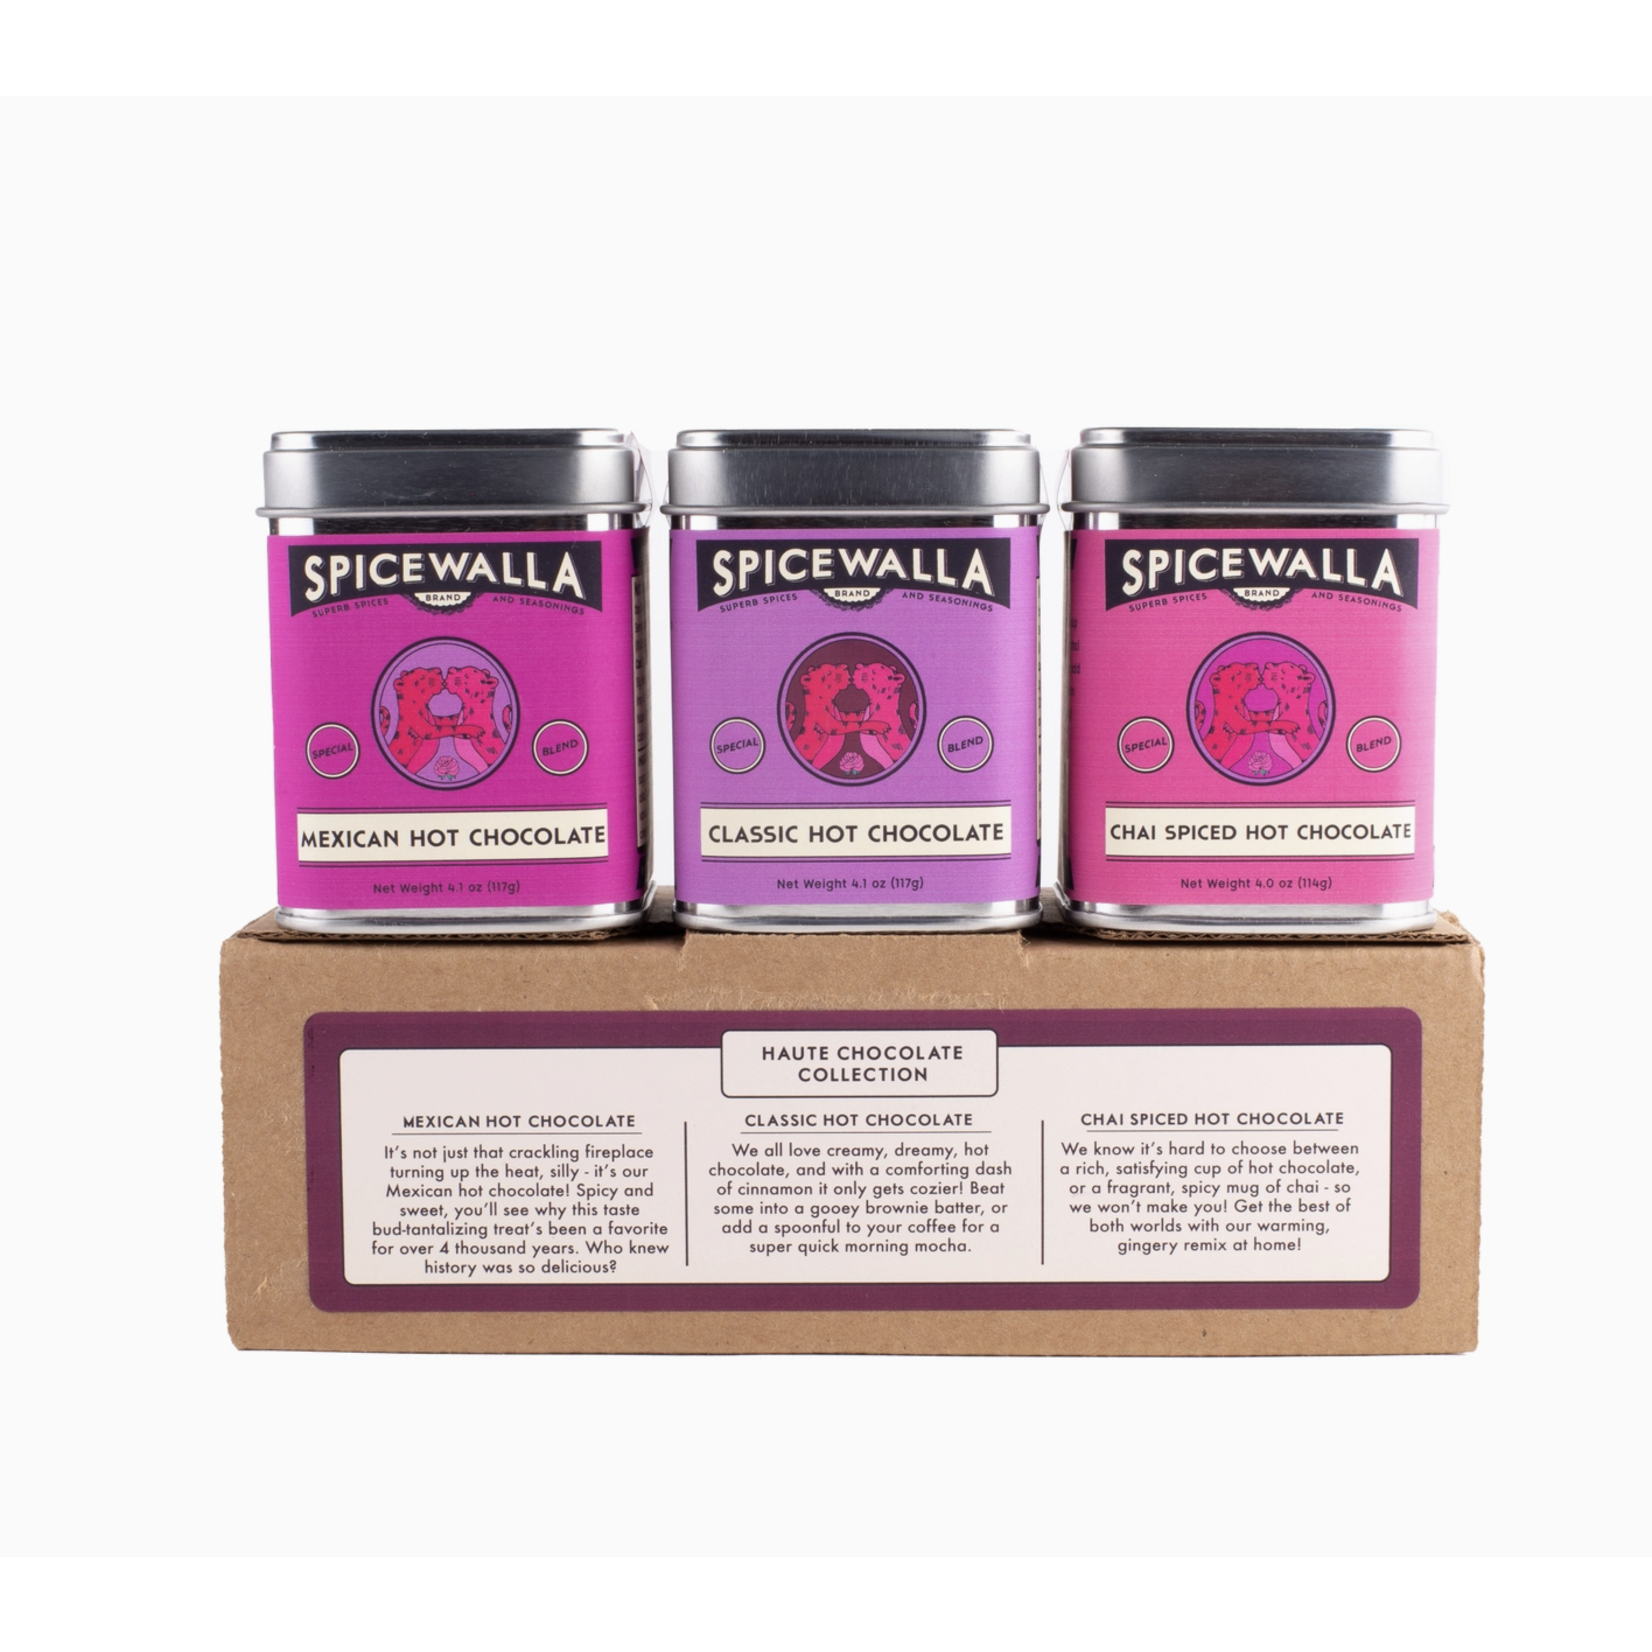 Spicewalla Haute Chocolate Valentine's Collection Limited Edition